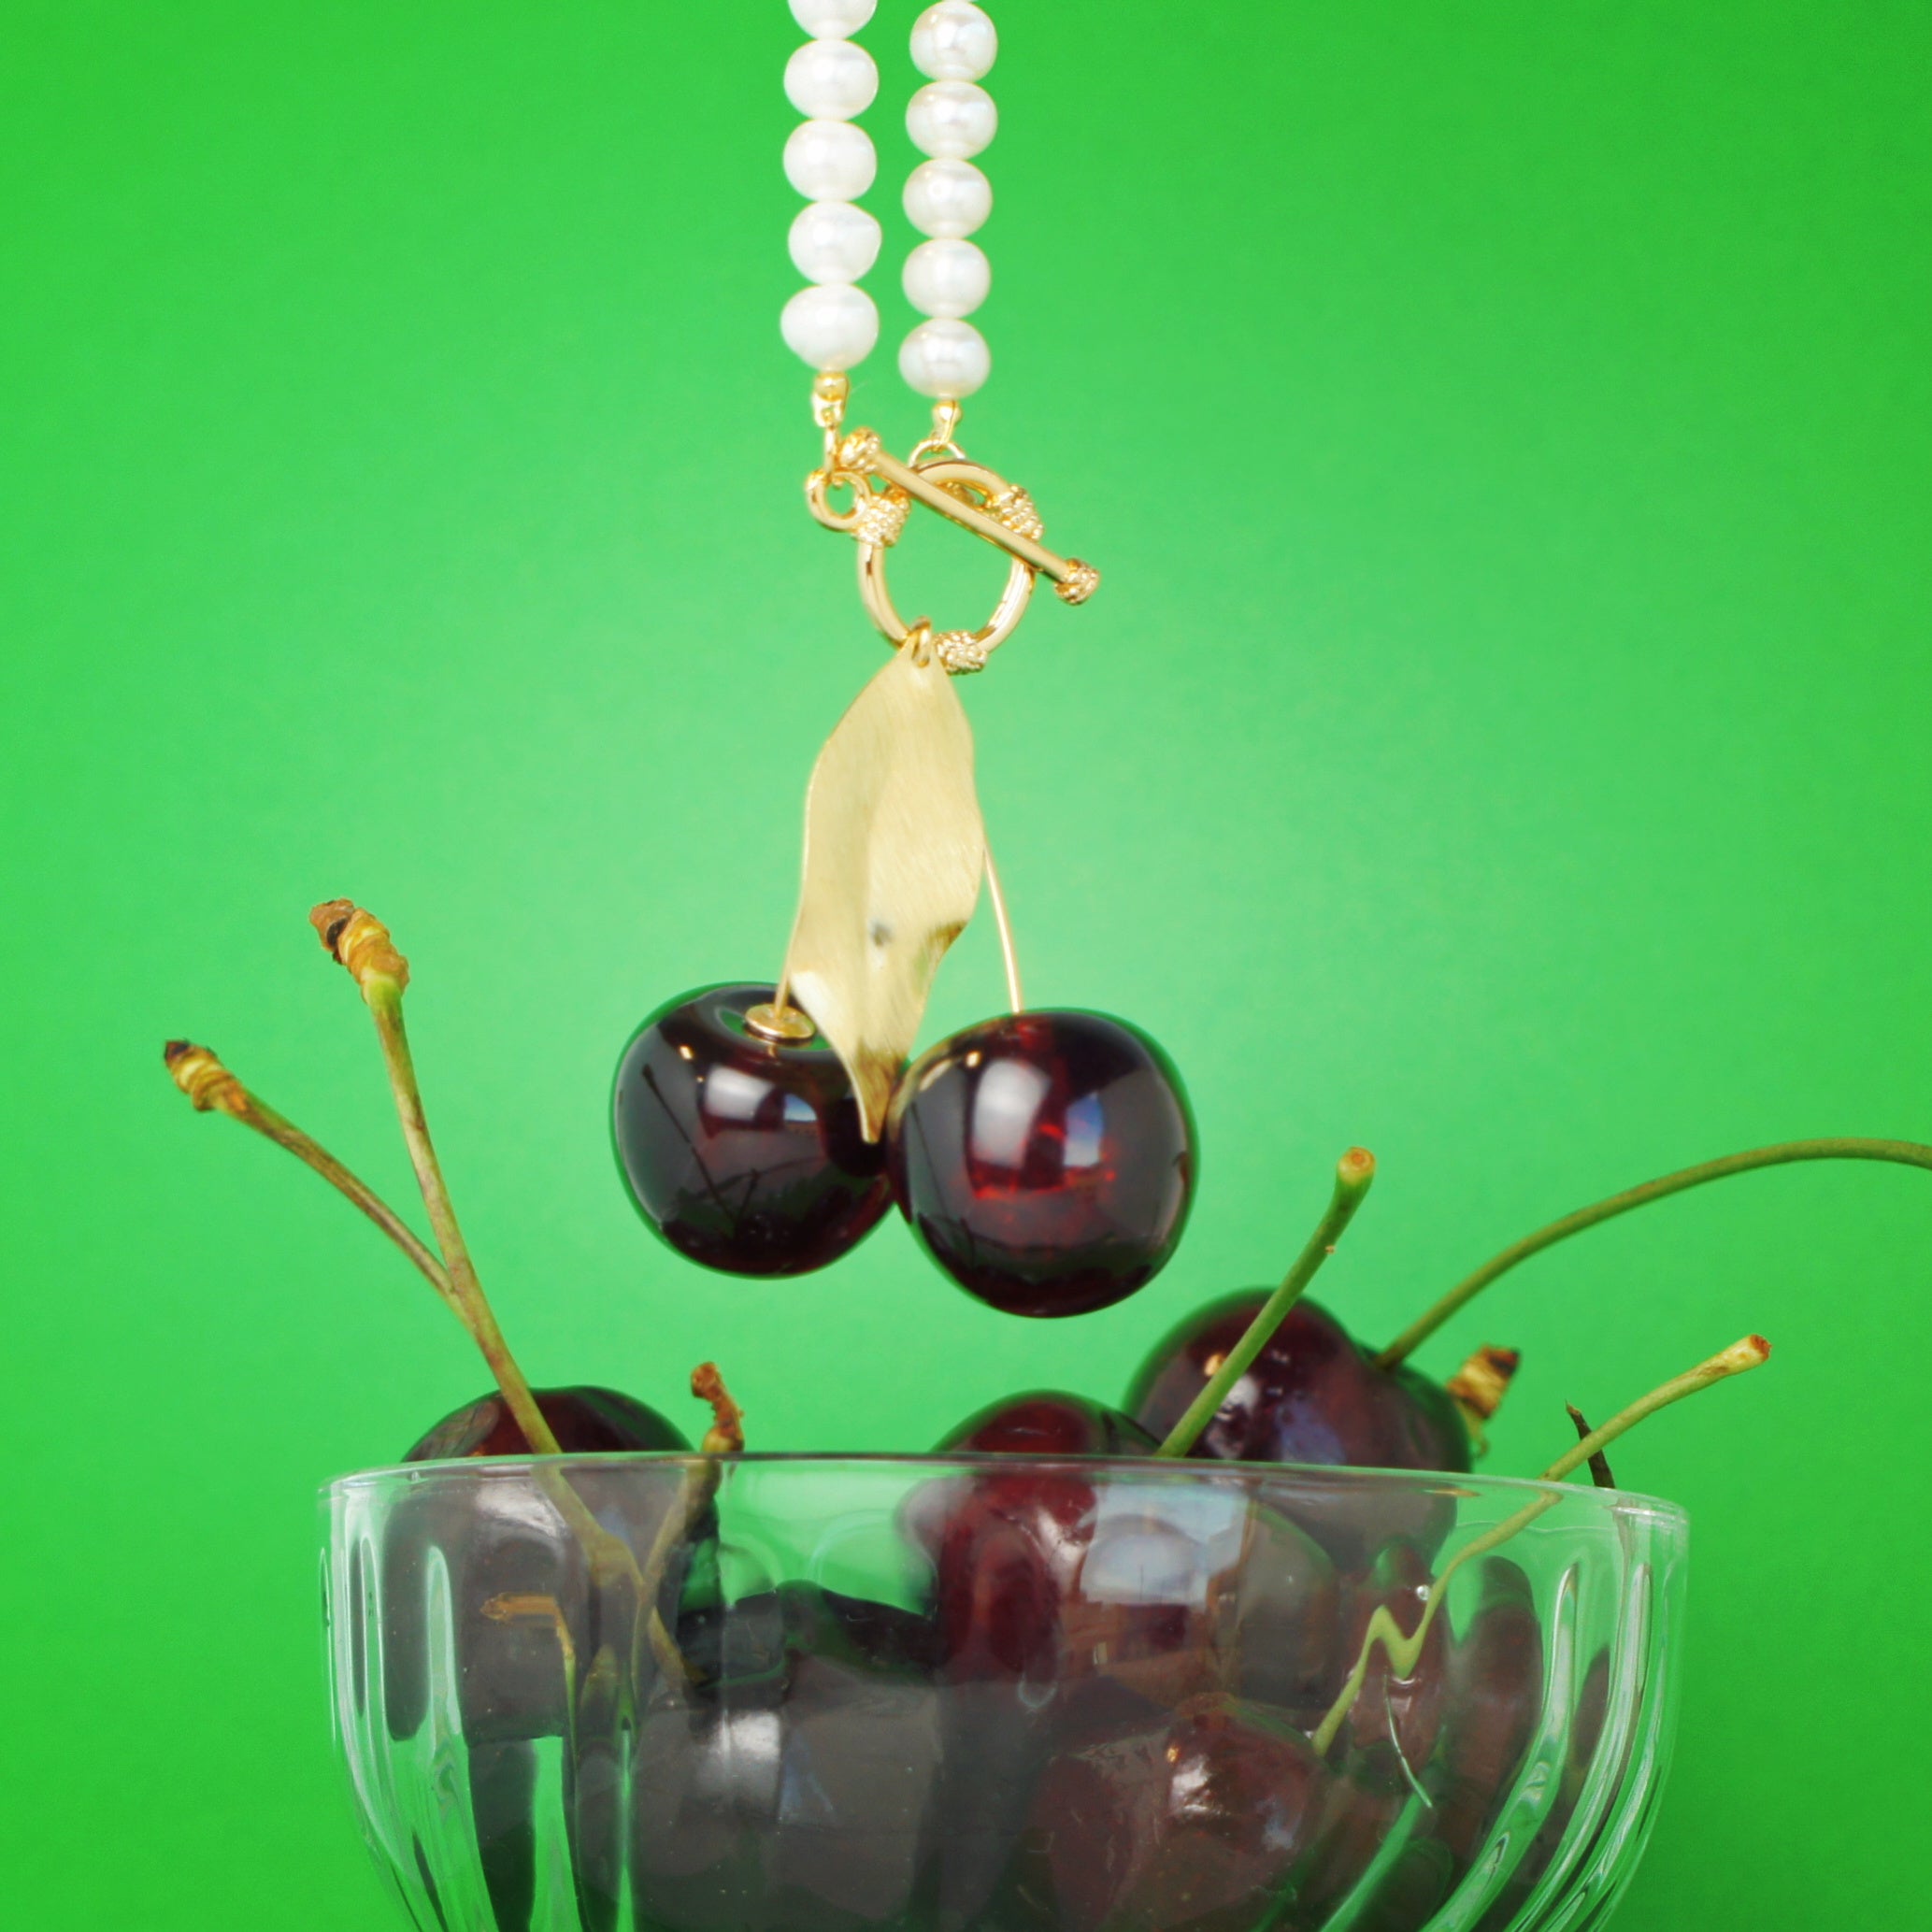 Amarena Cherry Pearl Necklace